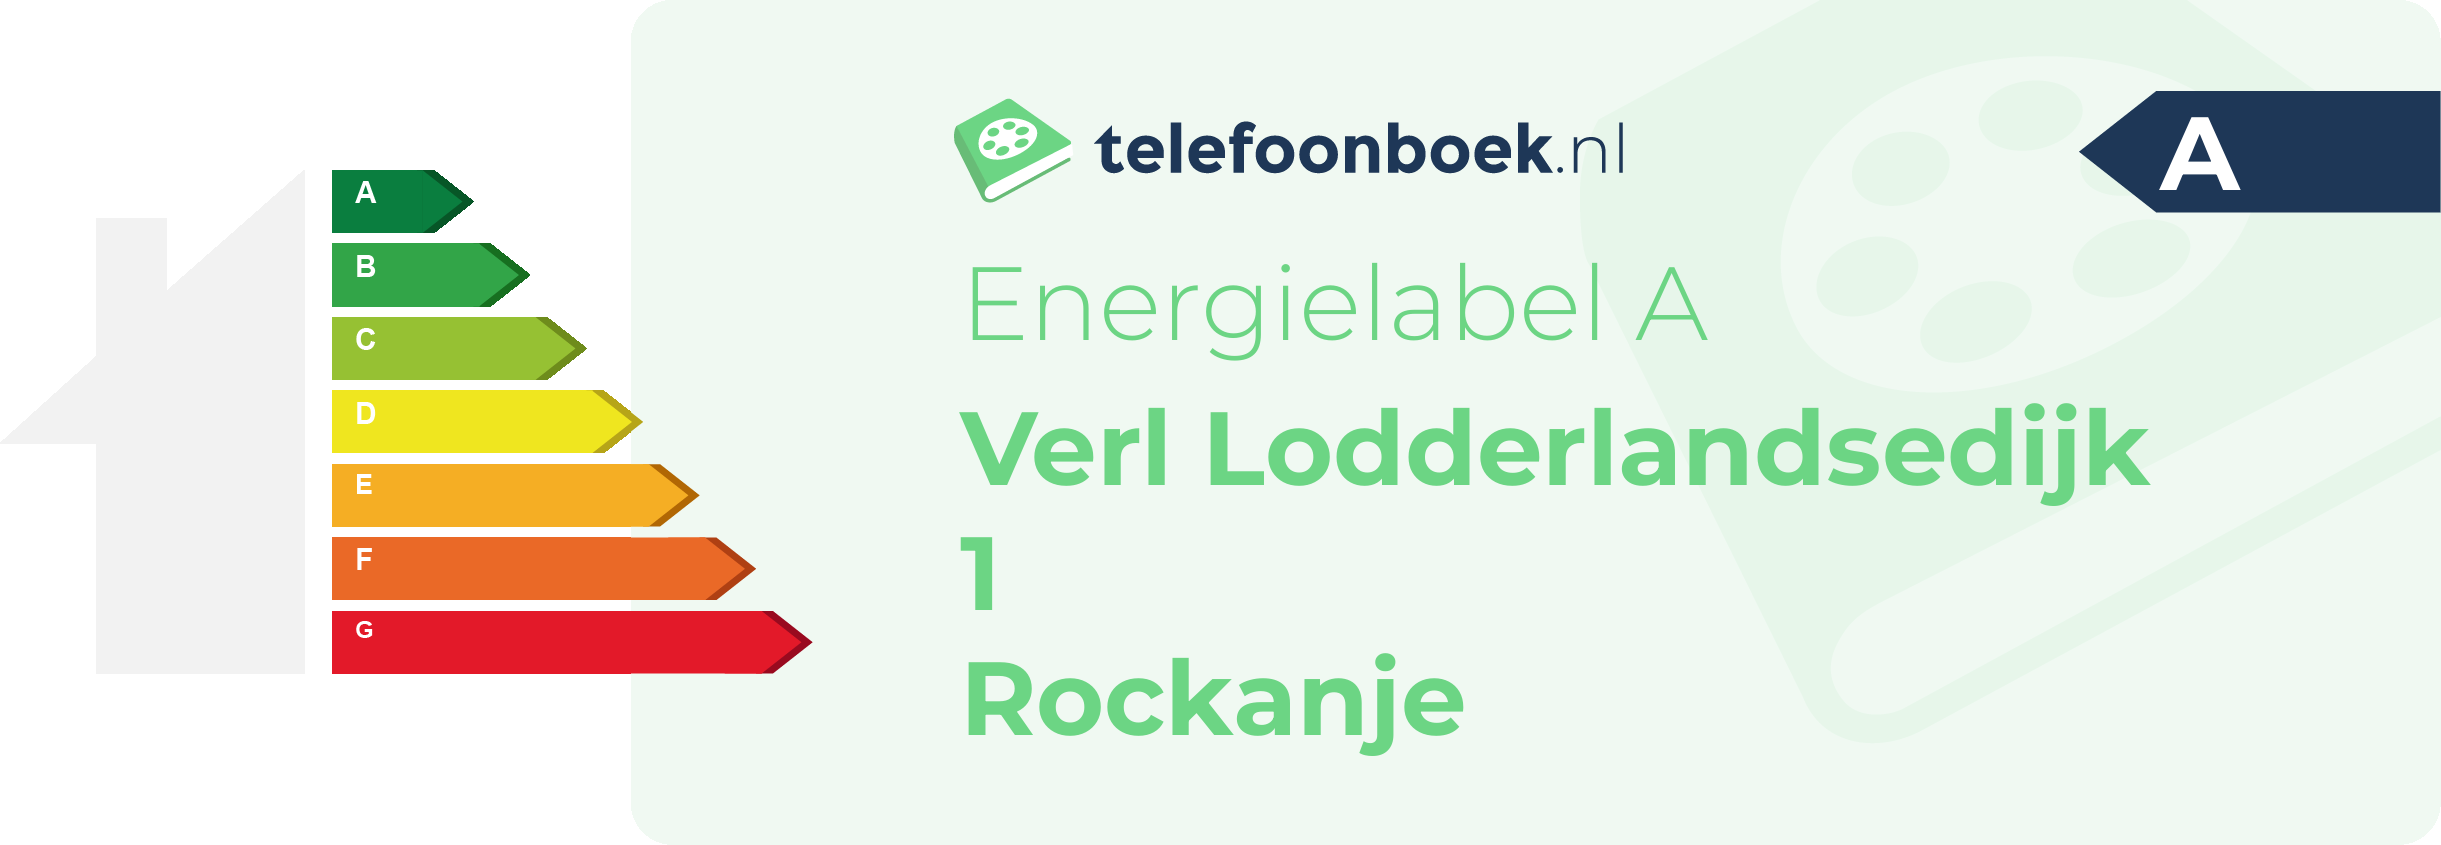 Energielabel Verl Lodderlandsedijk 1 Rockanje